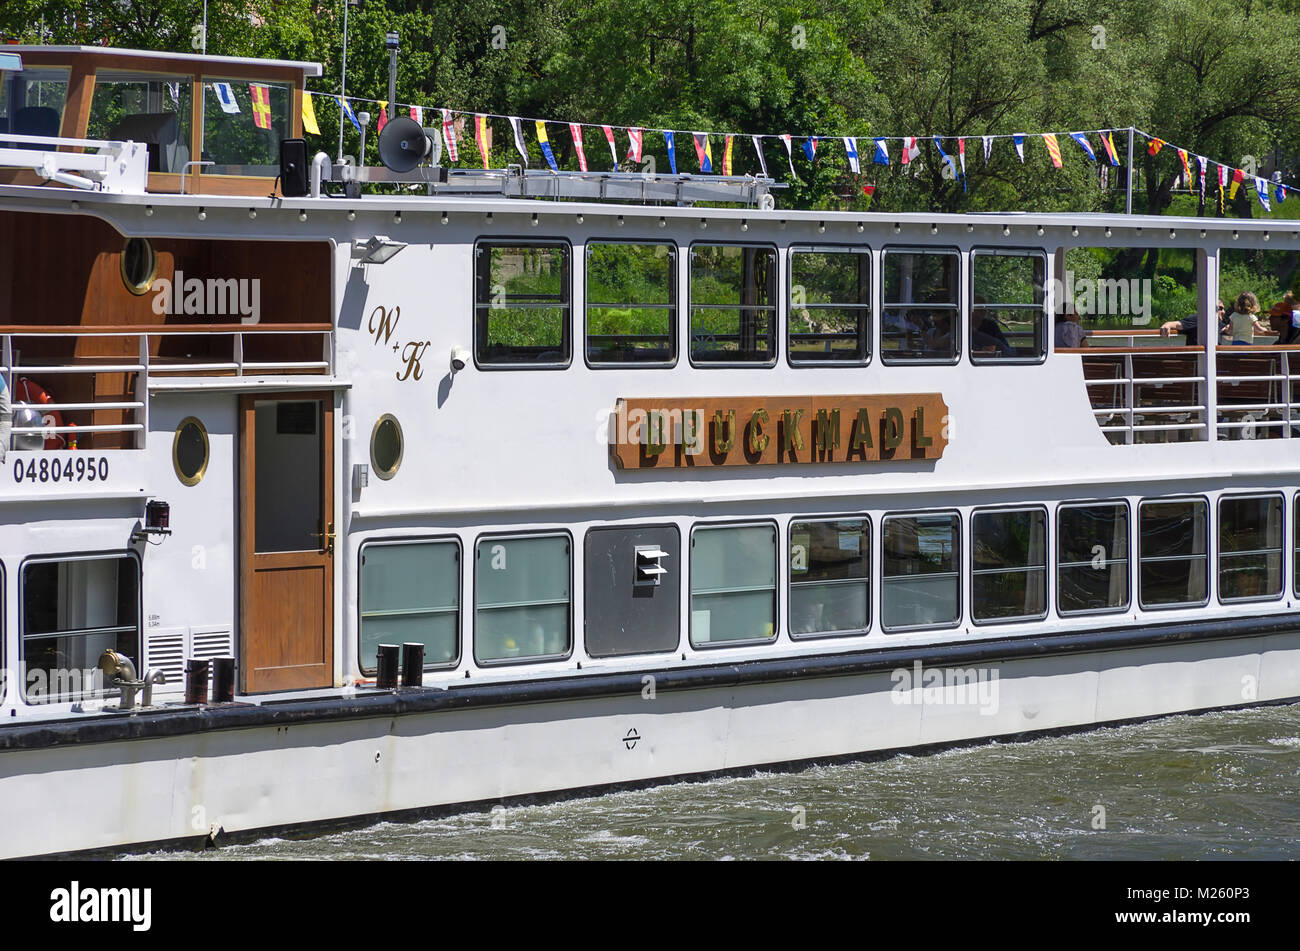 The excursion boat Bruckmadl on the Danube River, Regensburg, Bavaria, Germany. Stock Photo